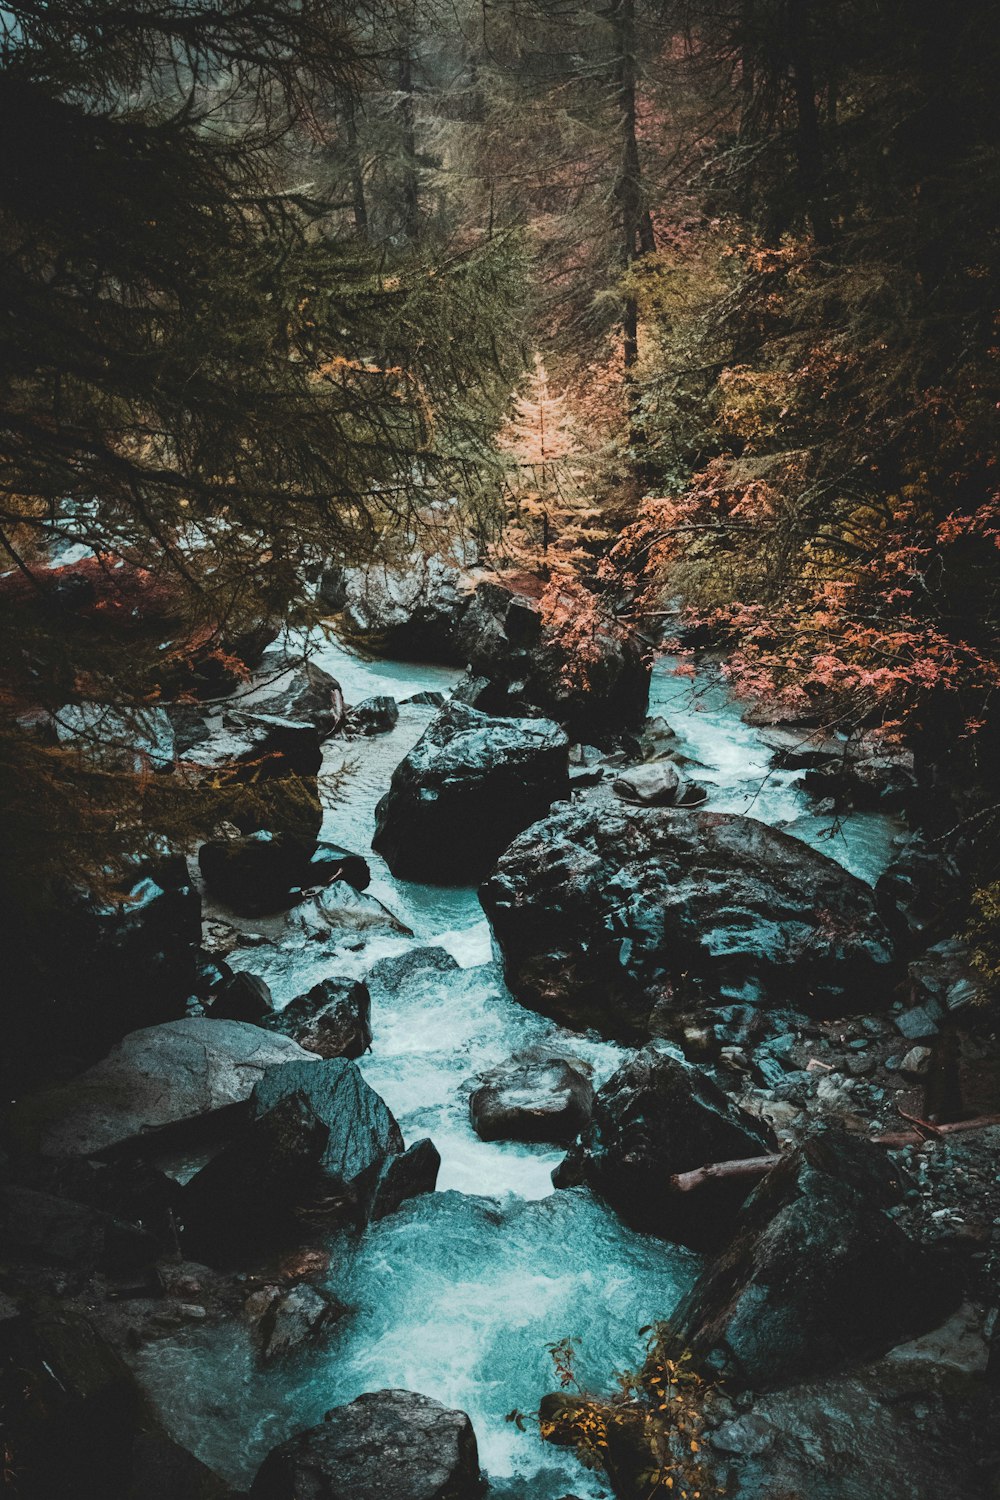 gray rocks in river between trees